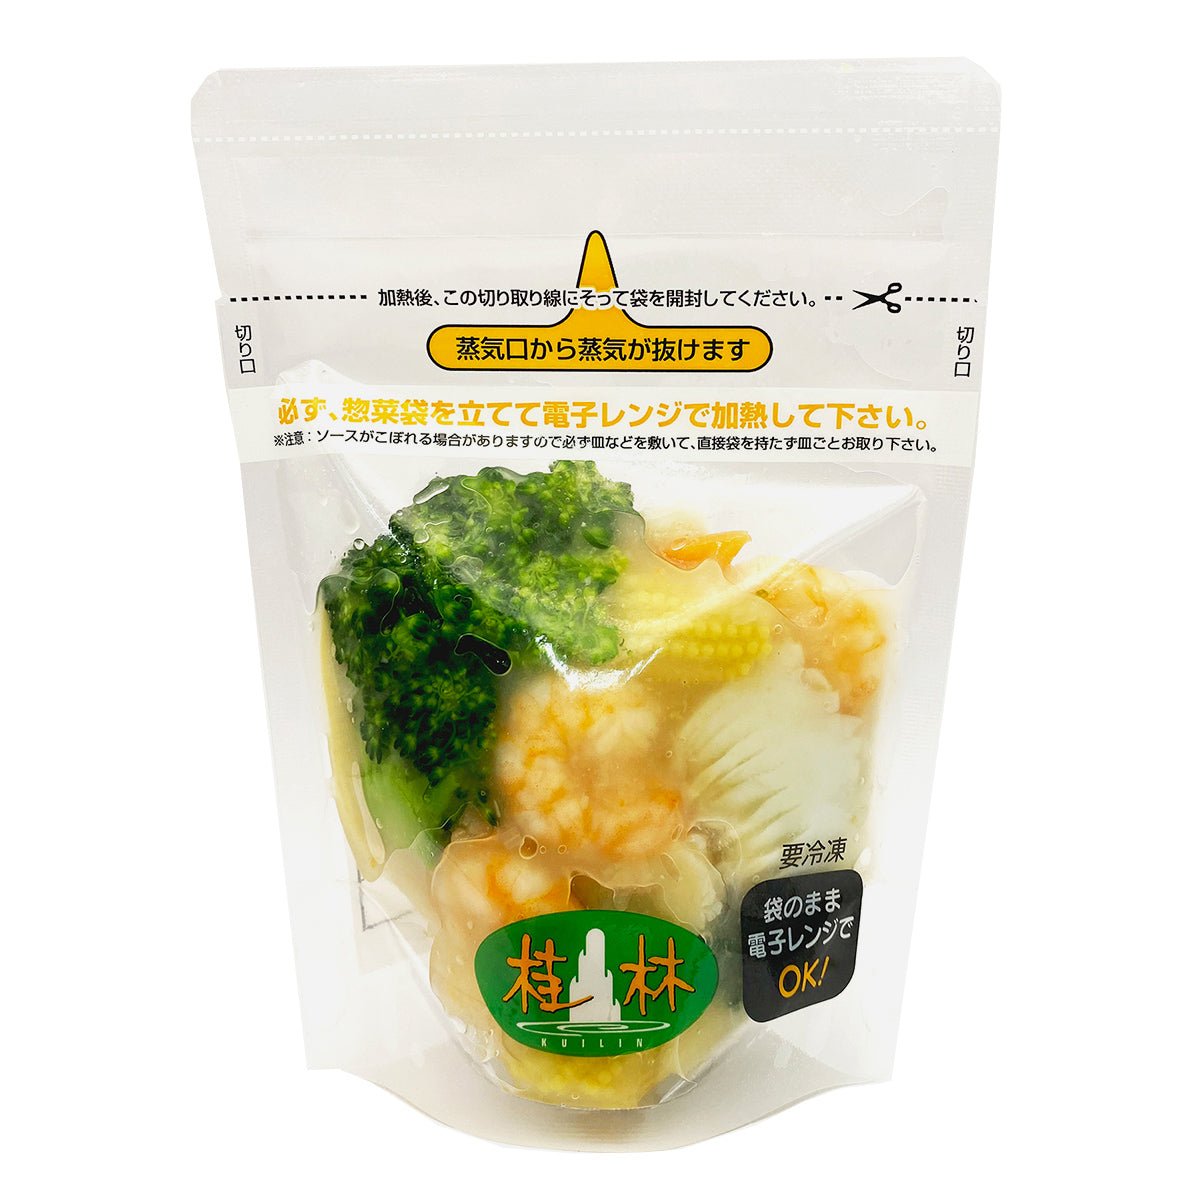 KUILIN - Seafood Happosai Chop Suey - Hotate, Shrimp, Squid, Takenoko - Tokyo Fresh Direct